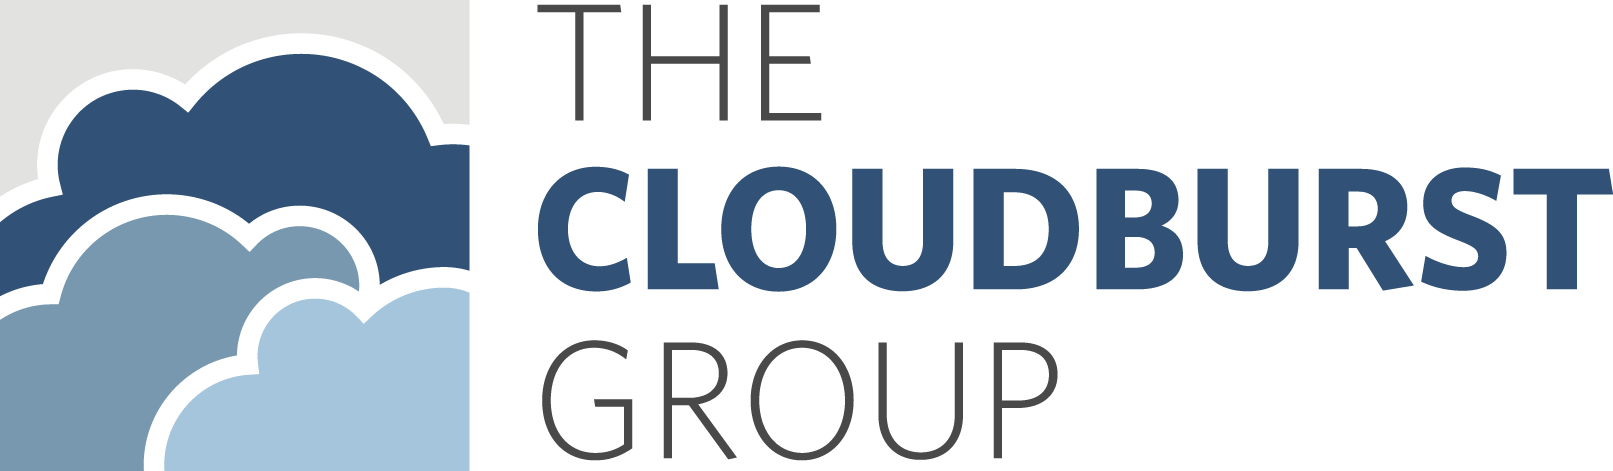 The Cloudburst Group